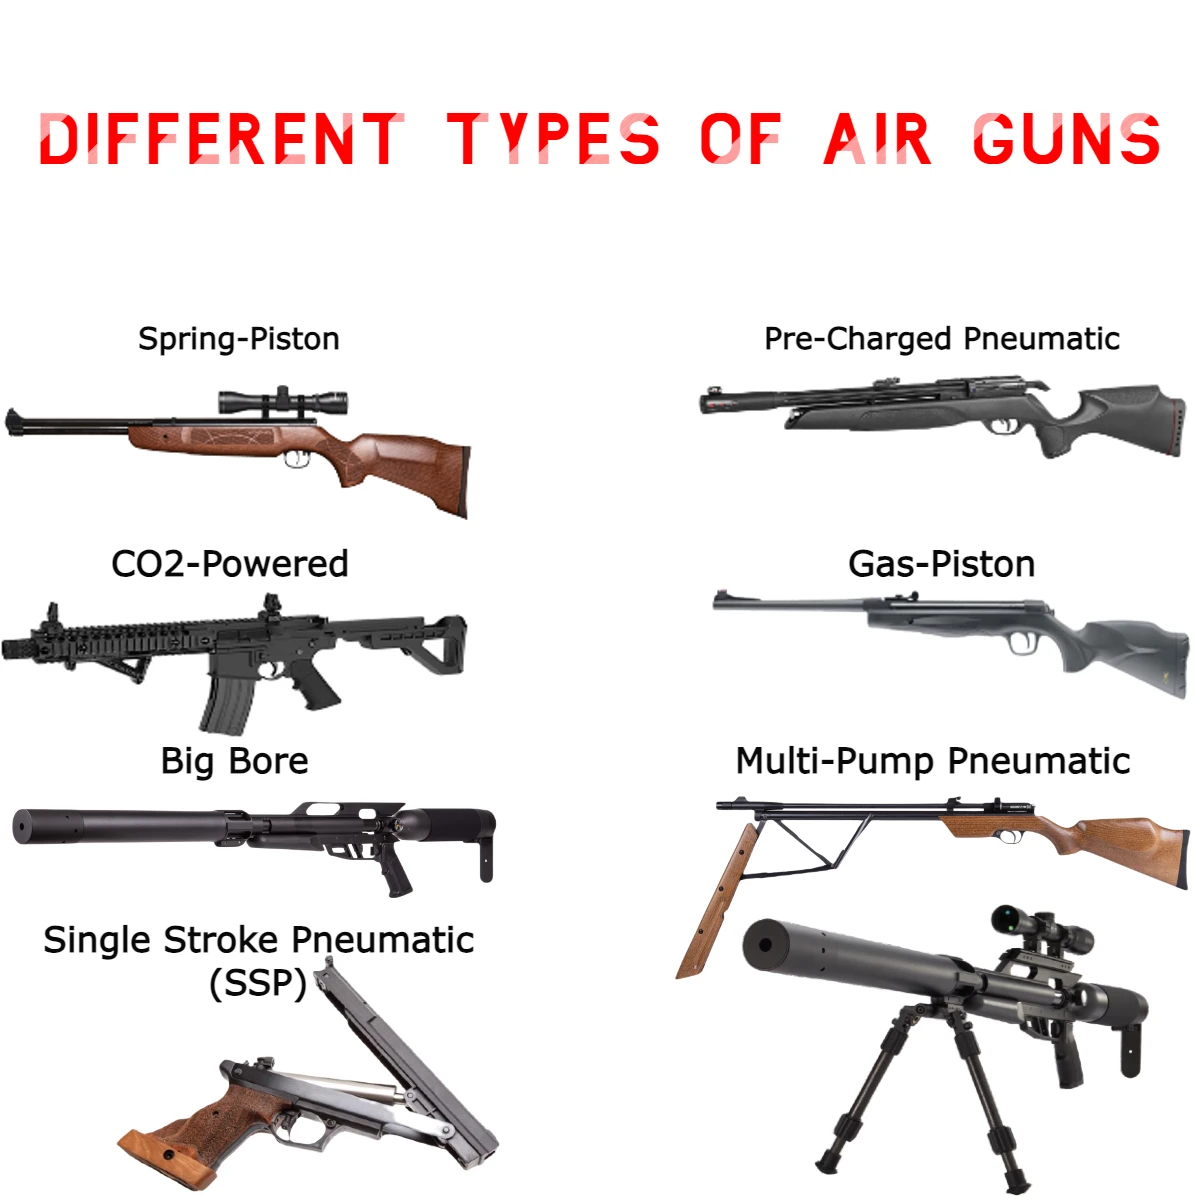 Types of Air Guns